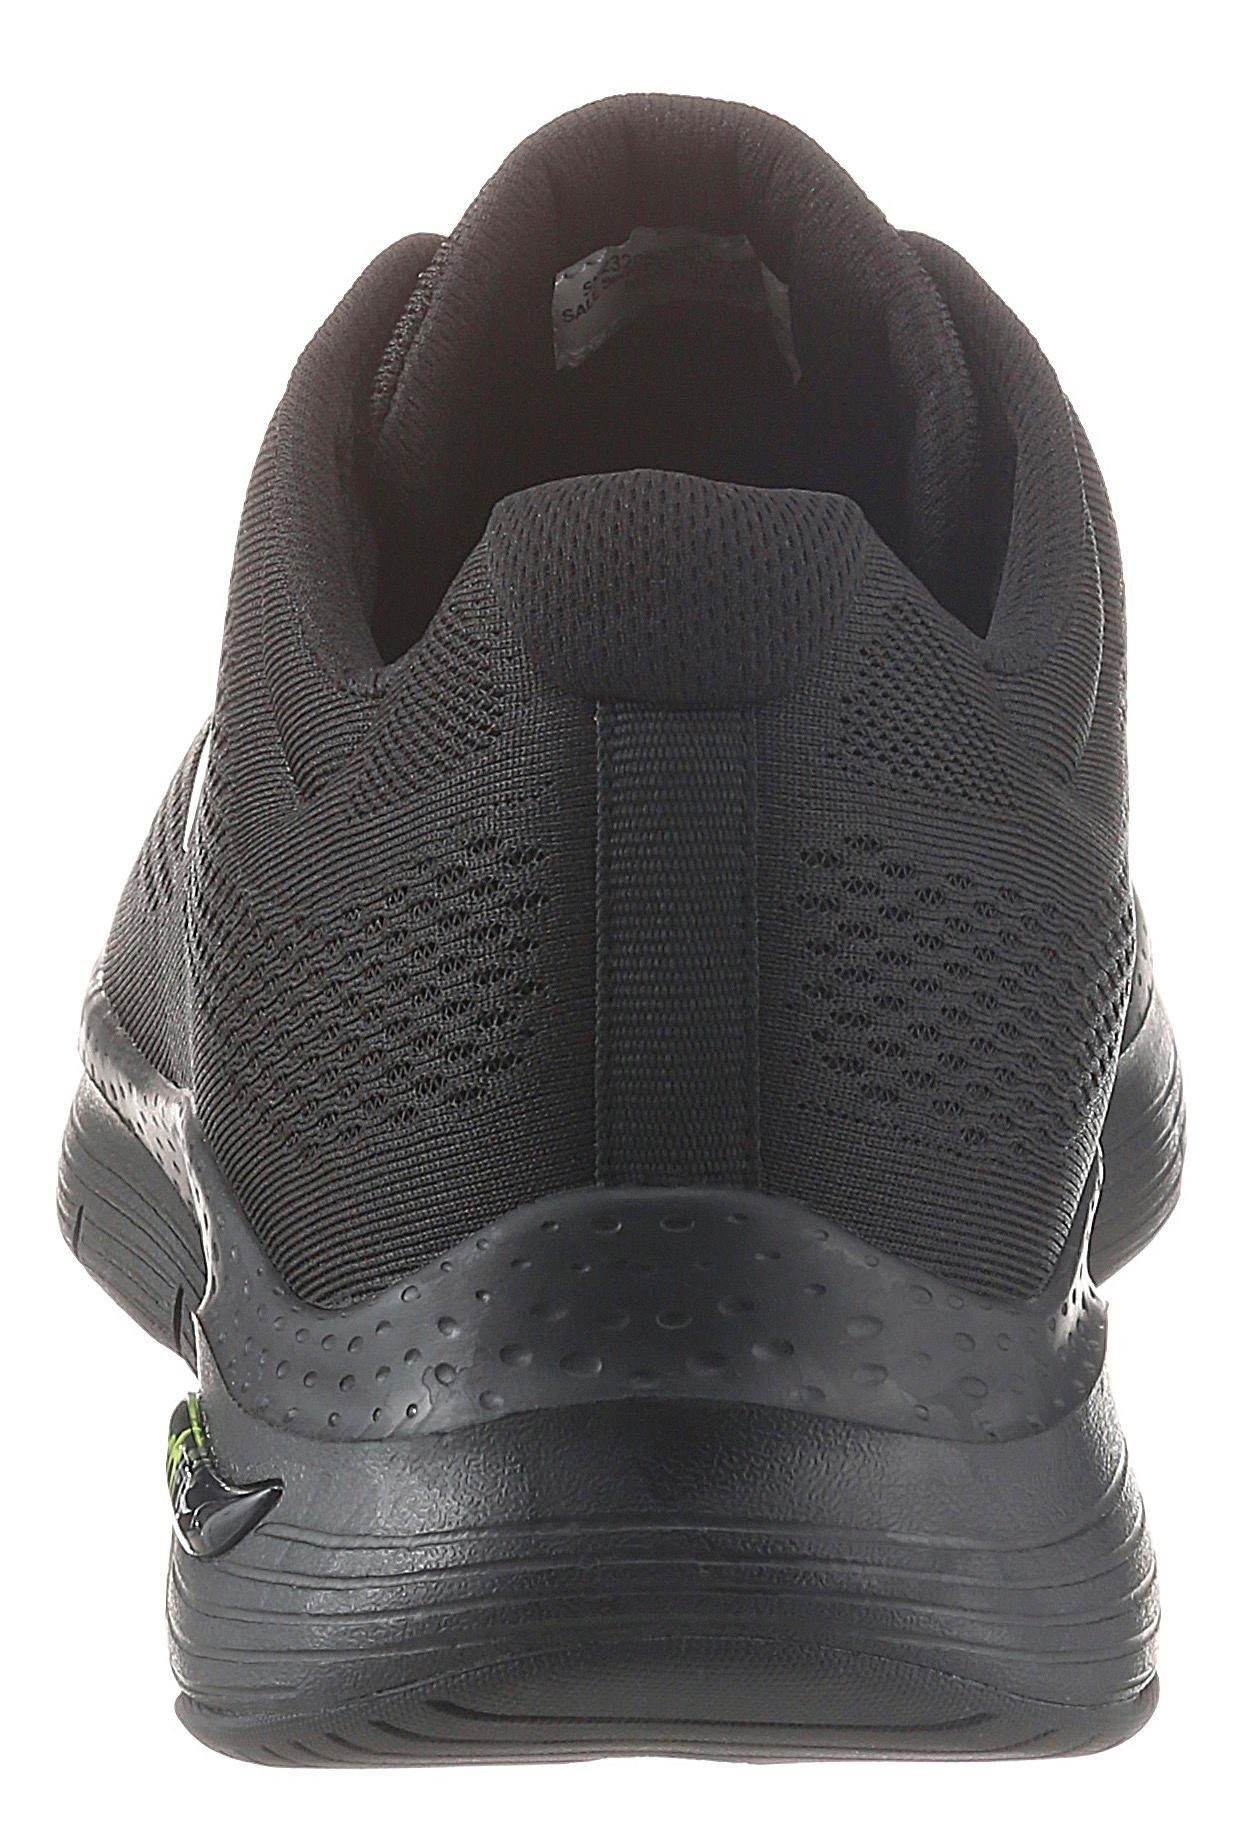 Fit-Funktion Arch mit Arch Skechers Sneaker Fit black komfortabler